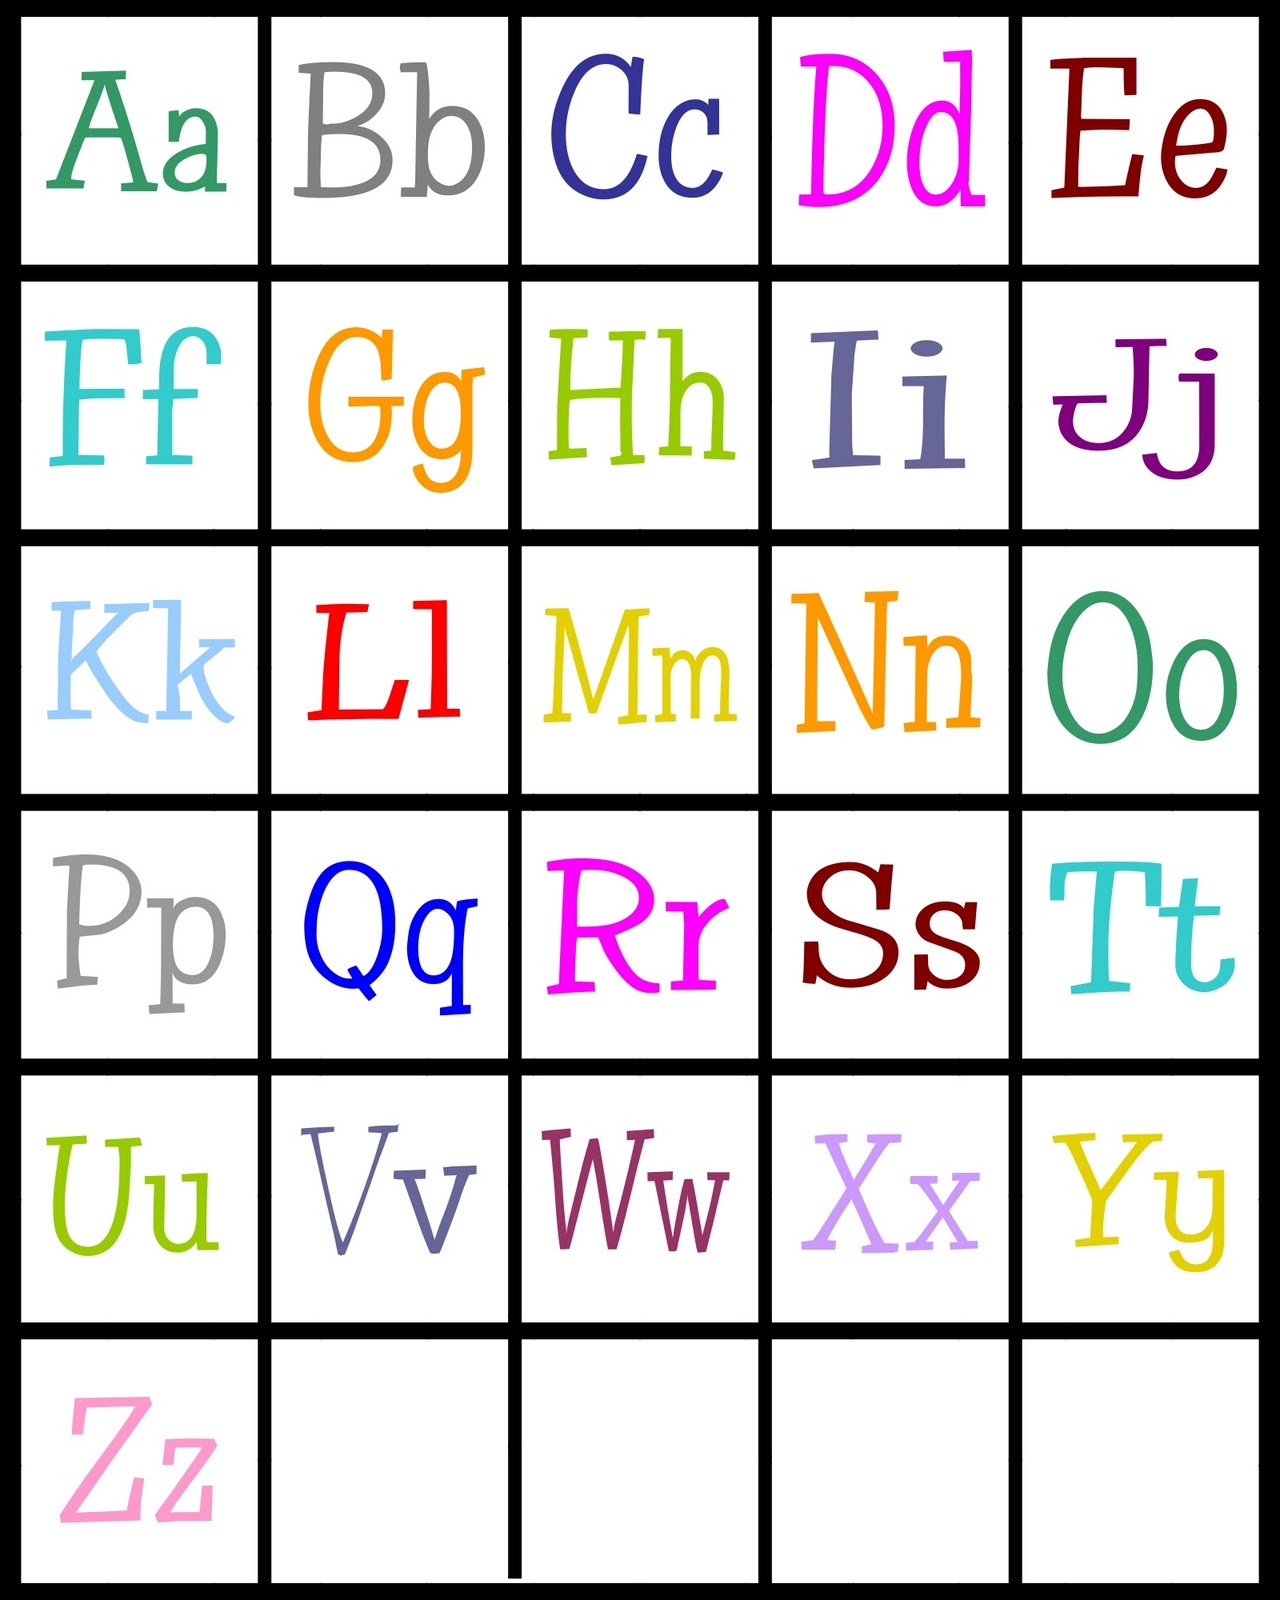 Alphabet Letters Printable Free